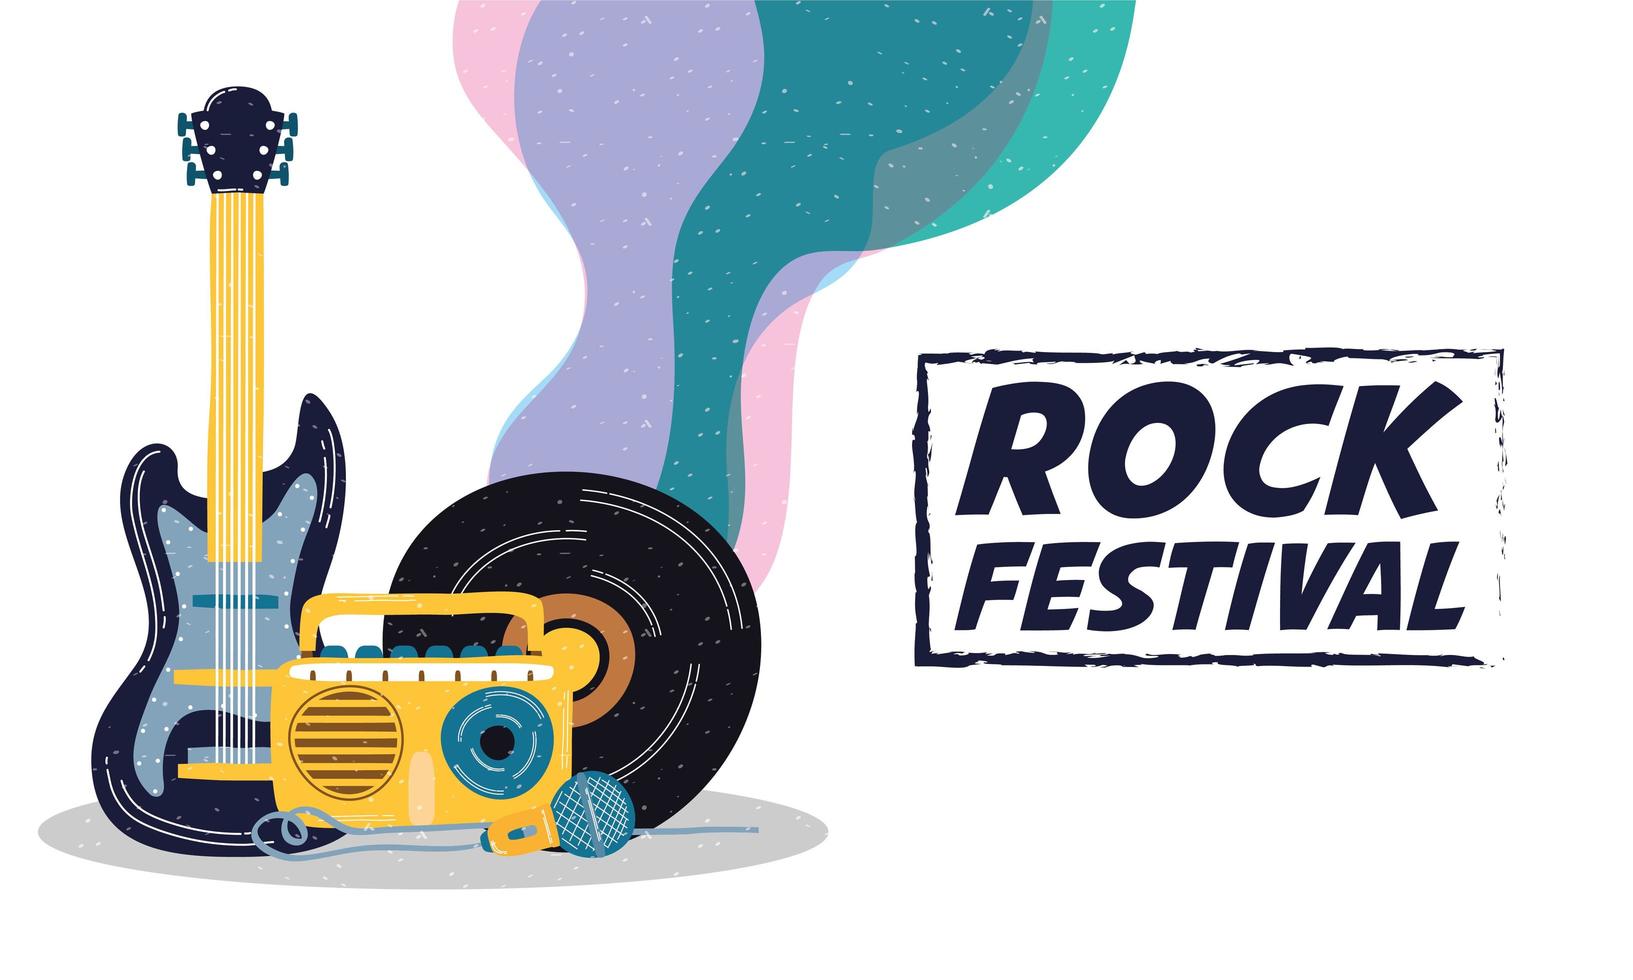 rock festival entertainment invitation poster vector